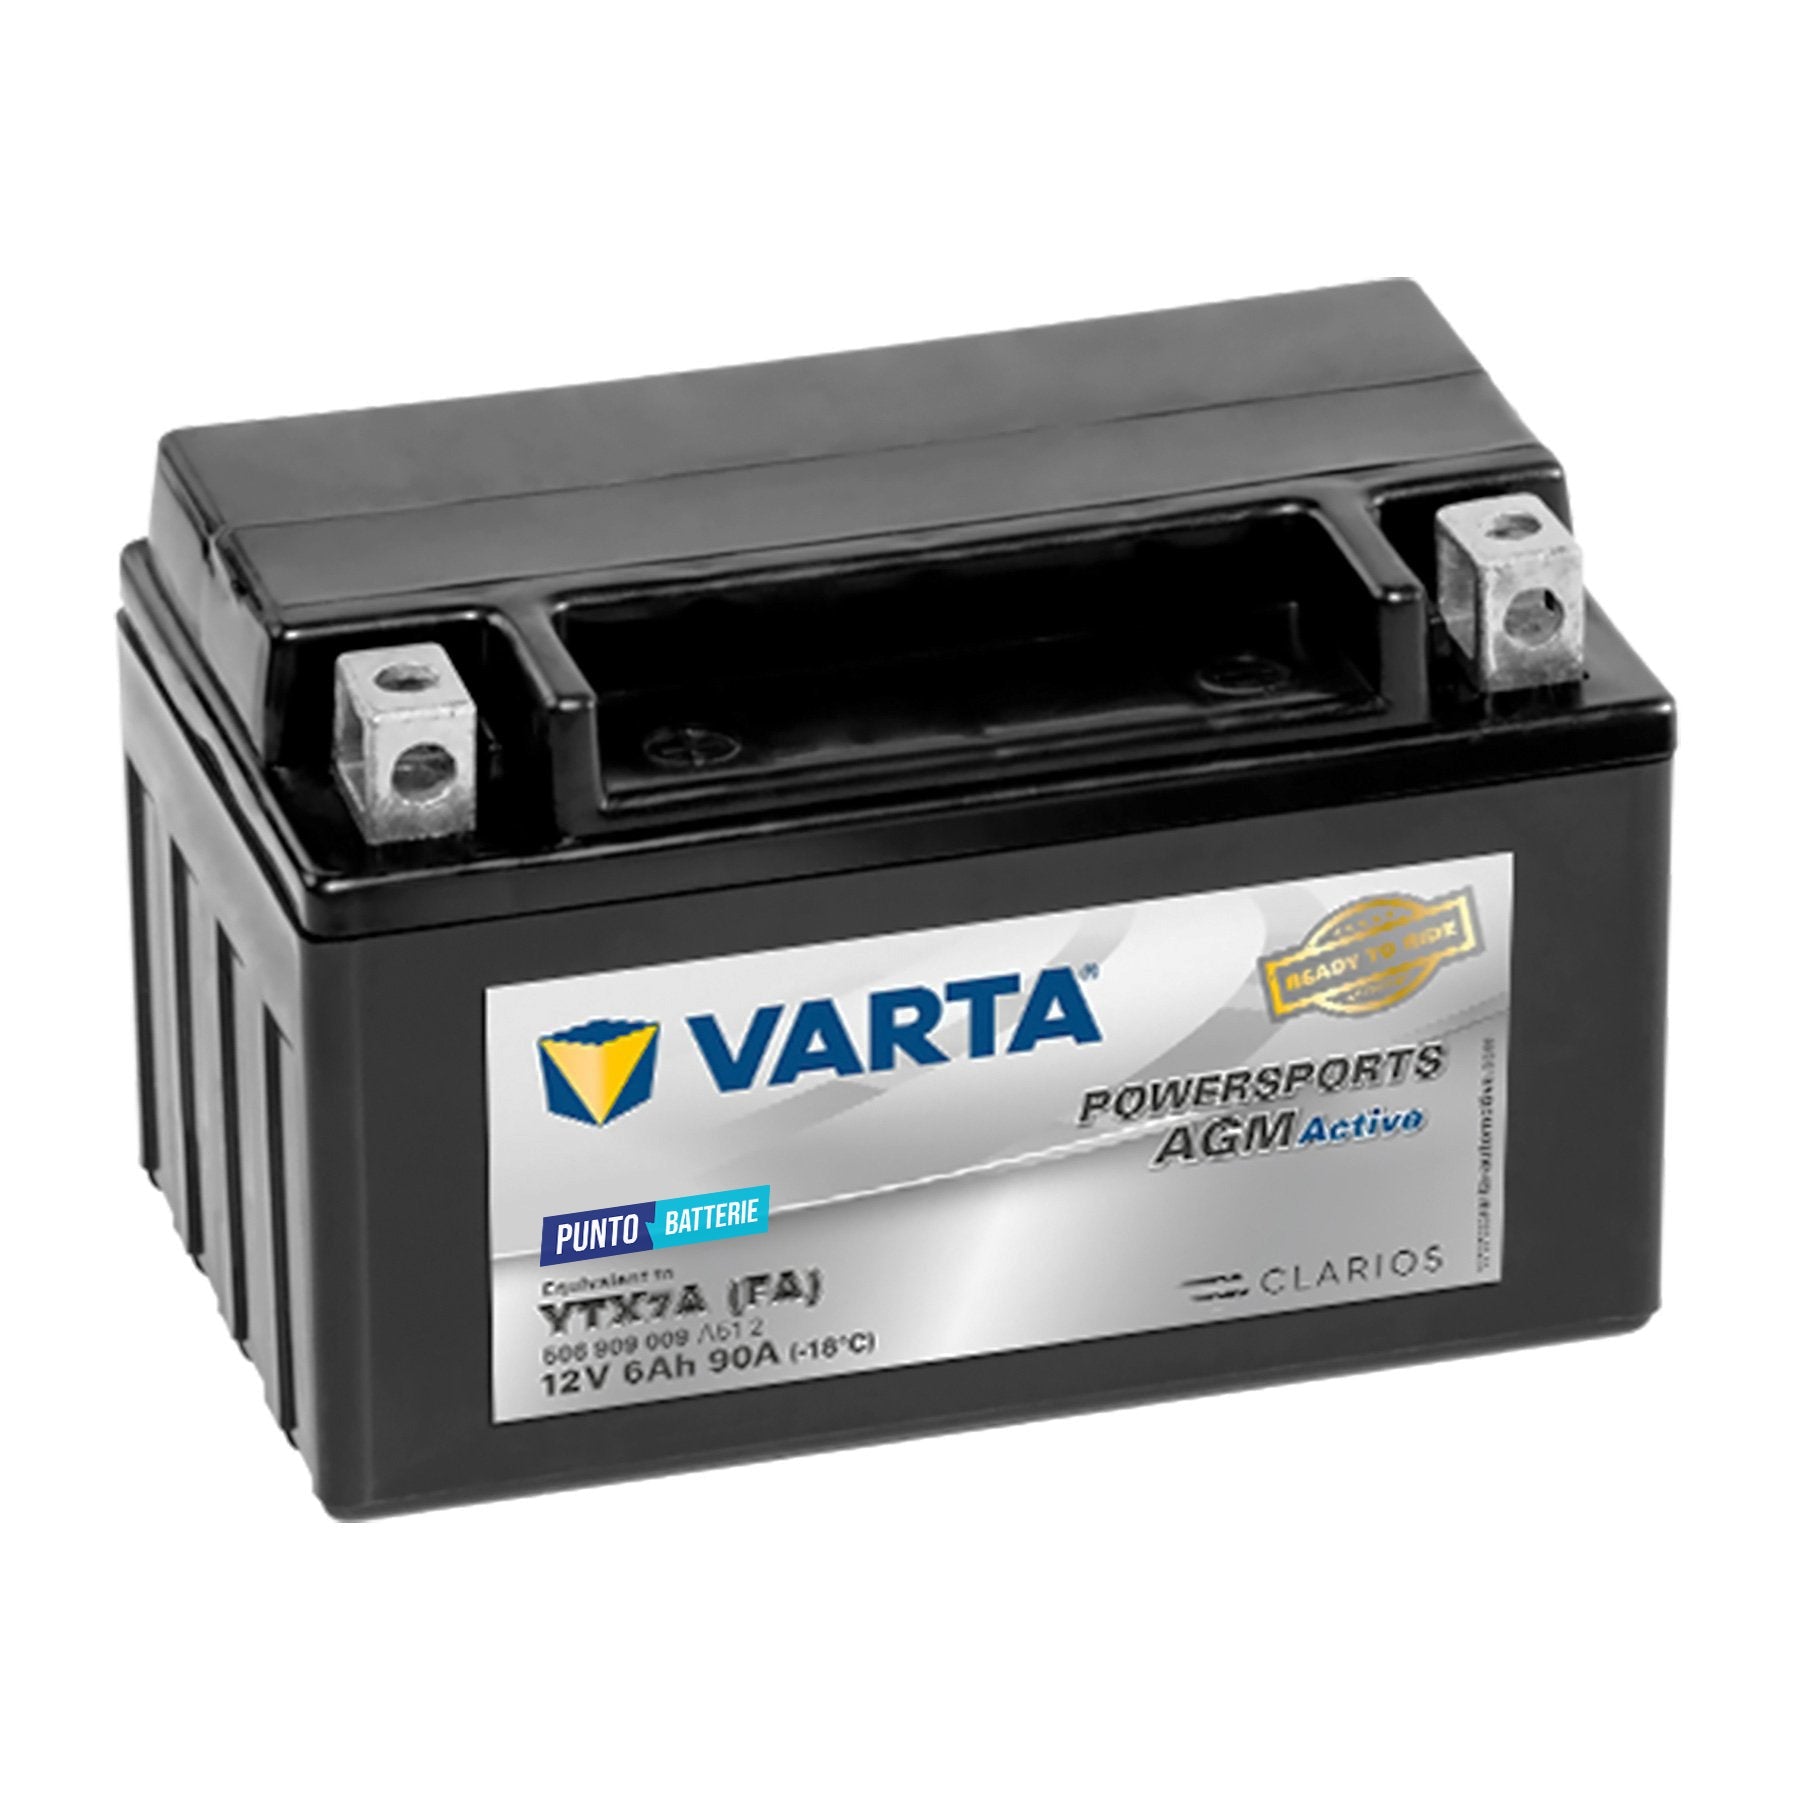 Batteria originale Varta Powersport AGM Active YTX7A-FA, dimensioni 150 x 87 x 130, polo positivo a sinistra, 12 volt, 6 amperora, 90 ampere. Batteria per moto, scooter e powersport.